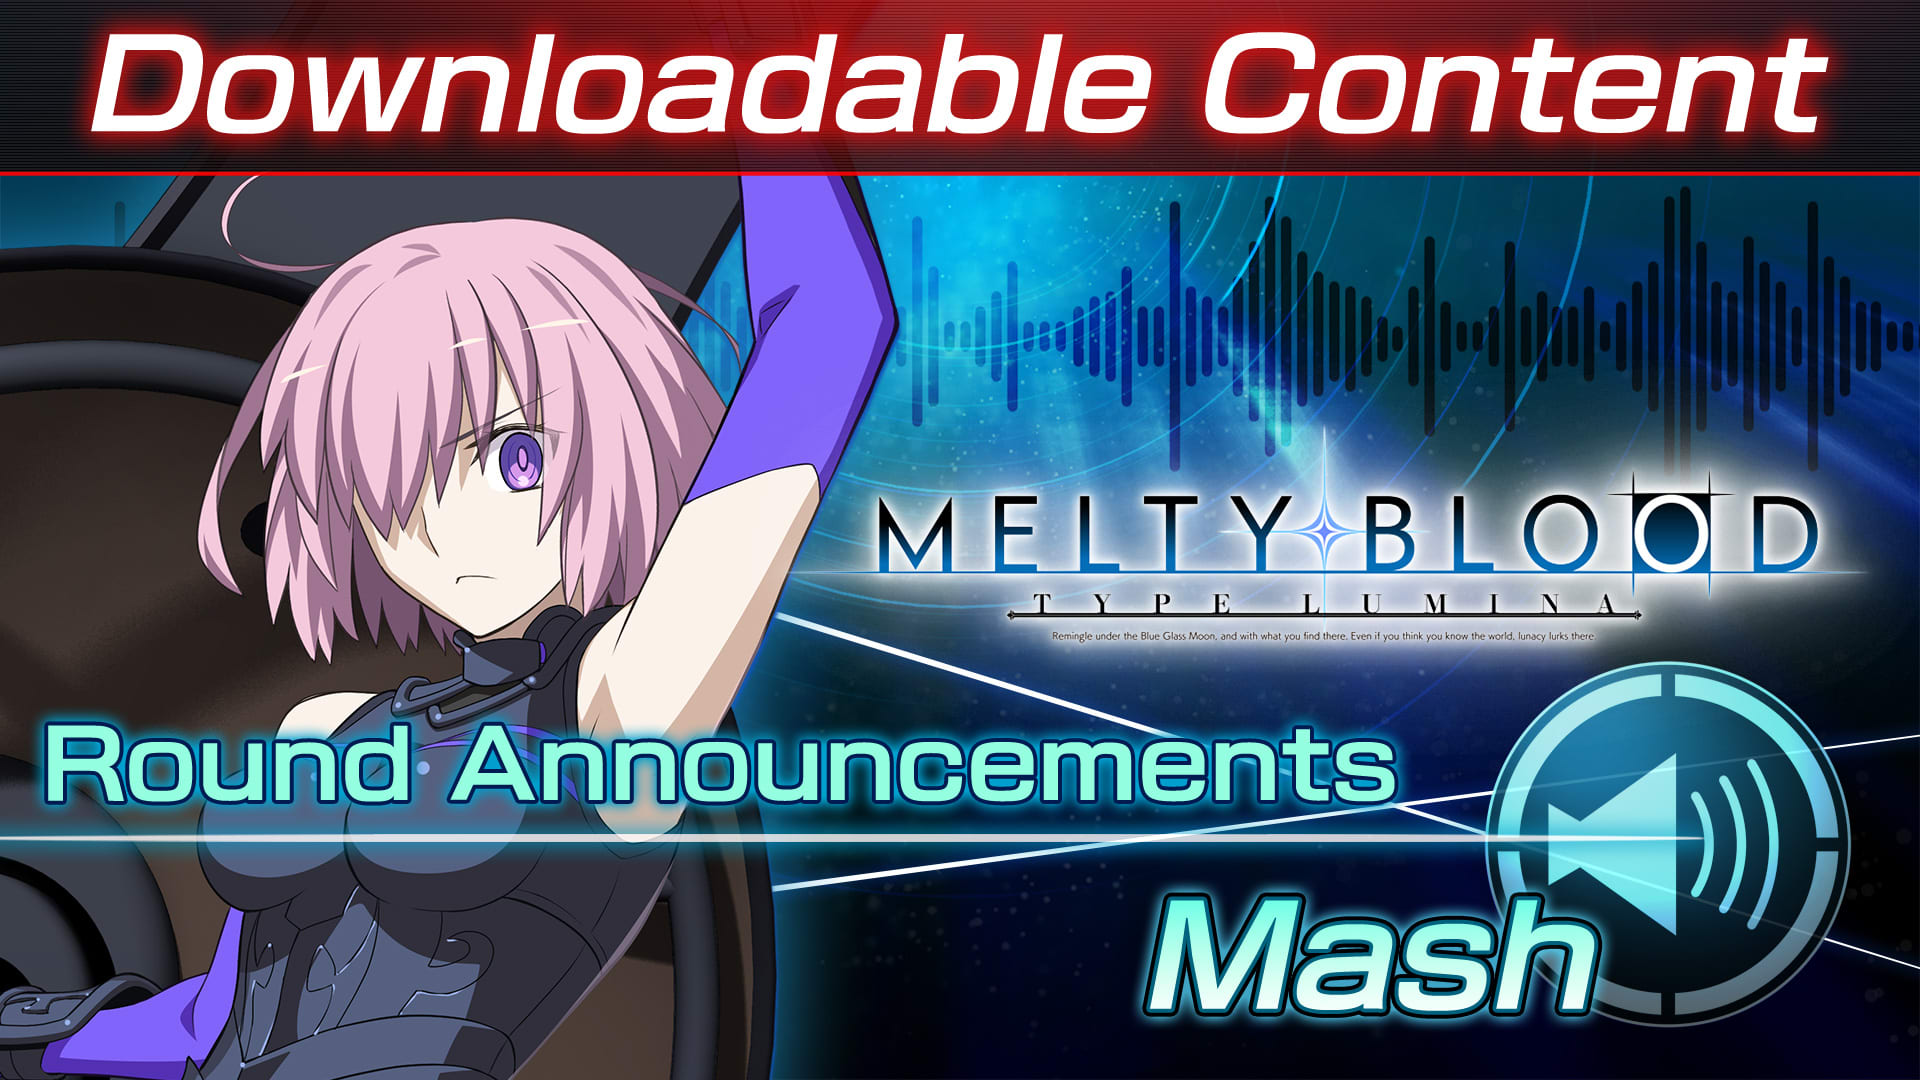 DLC: Mash Round Announcements